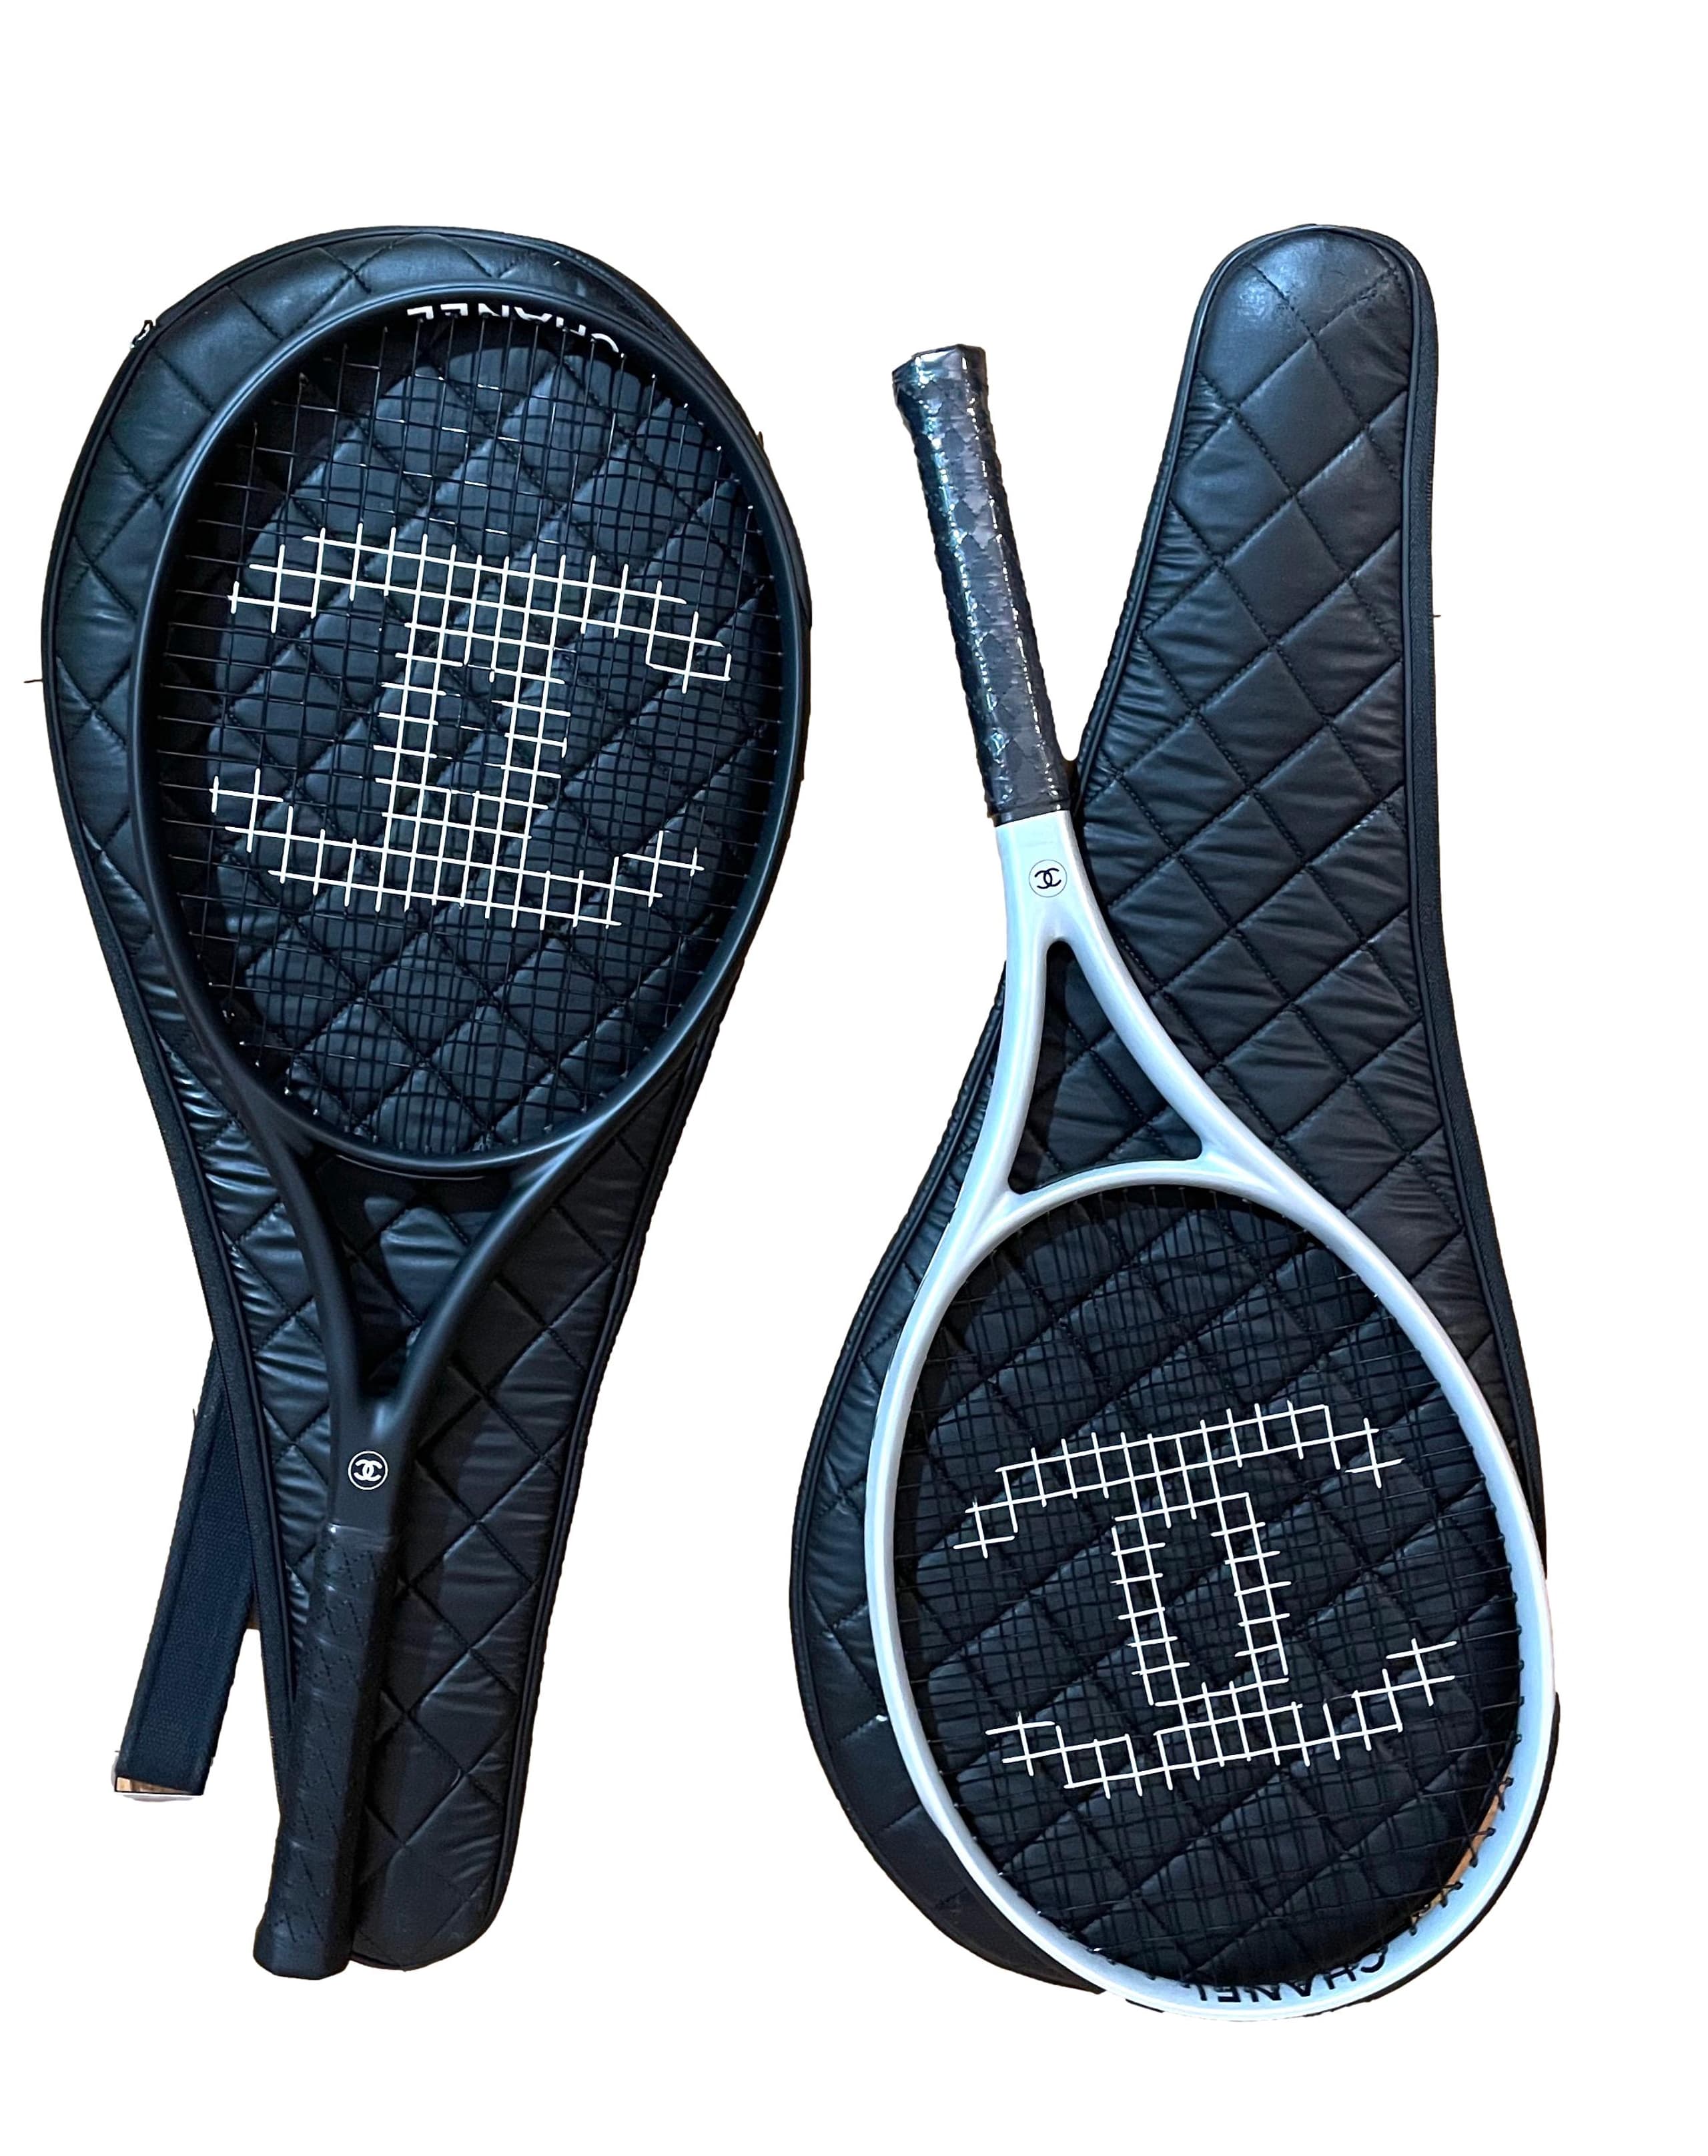 Chanel Tennis Racket - Black All Black